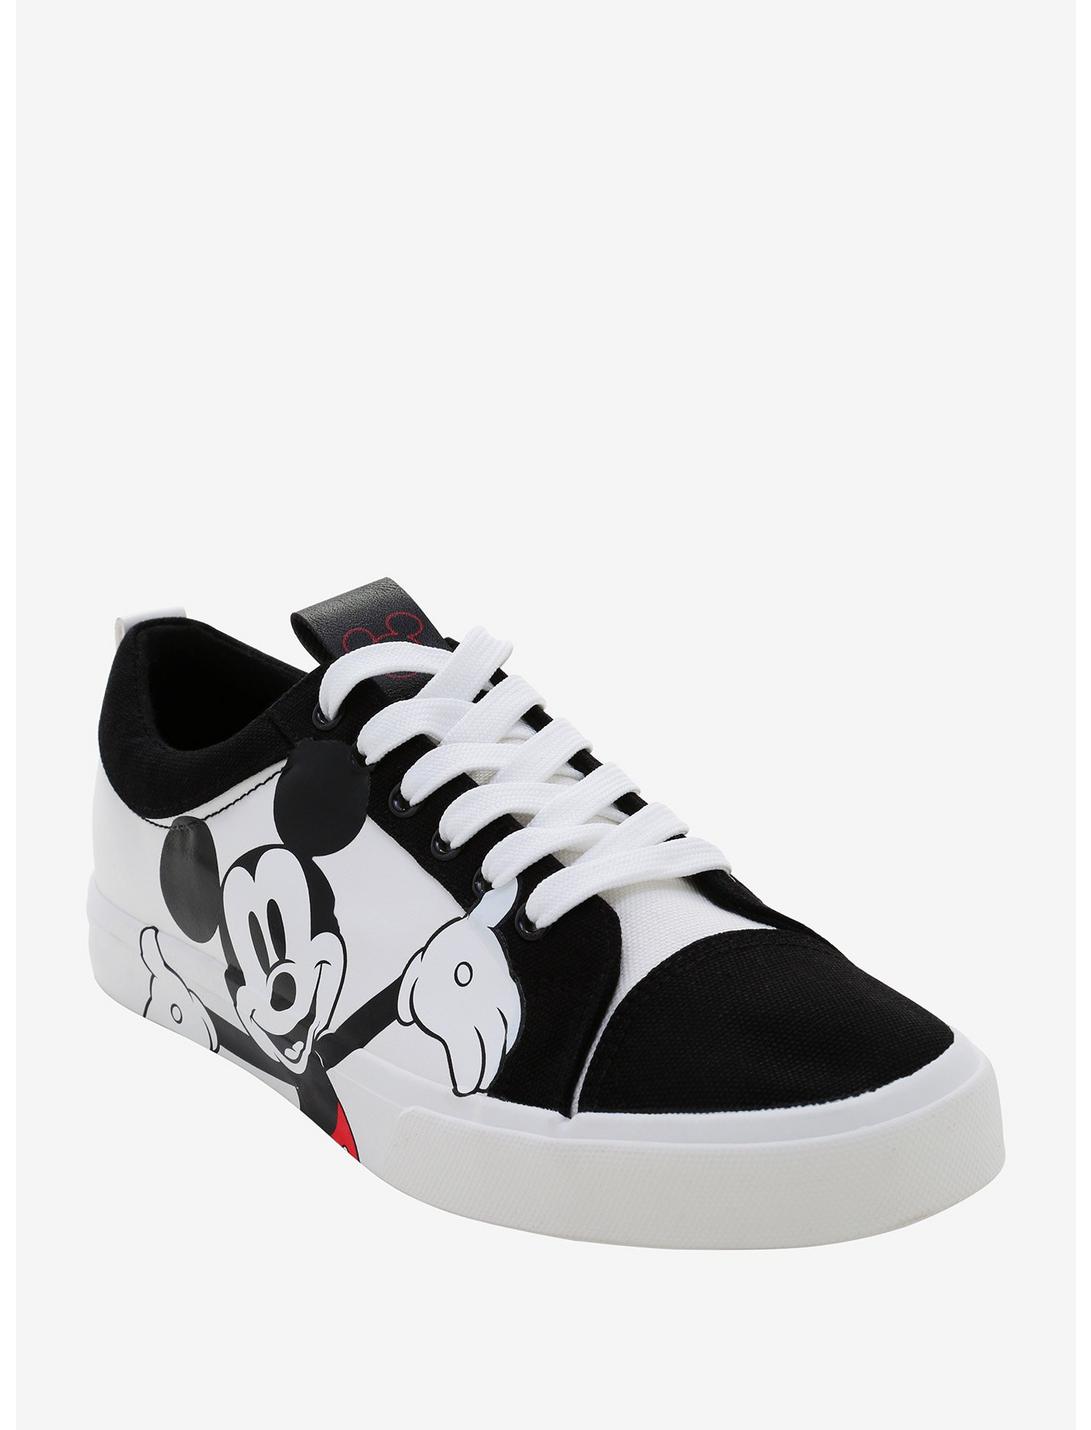 Disney Mickey Mouse Black & White Sneakers, MULTI, hi-res